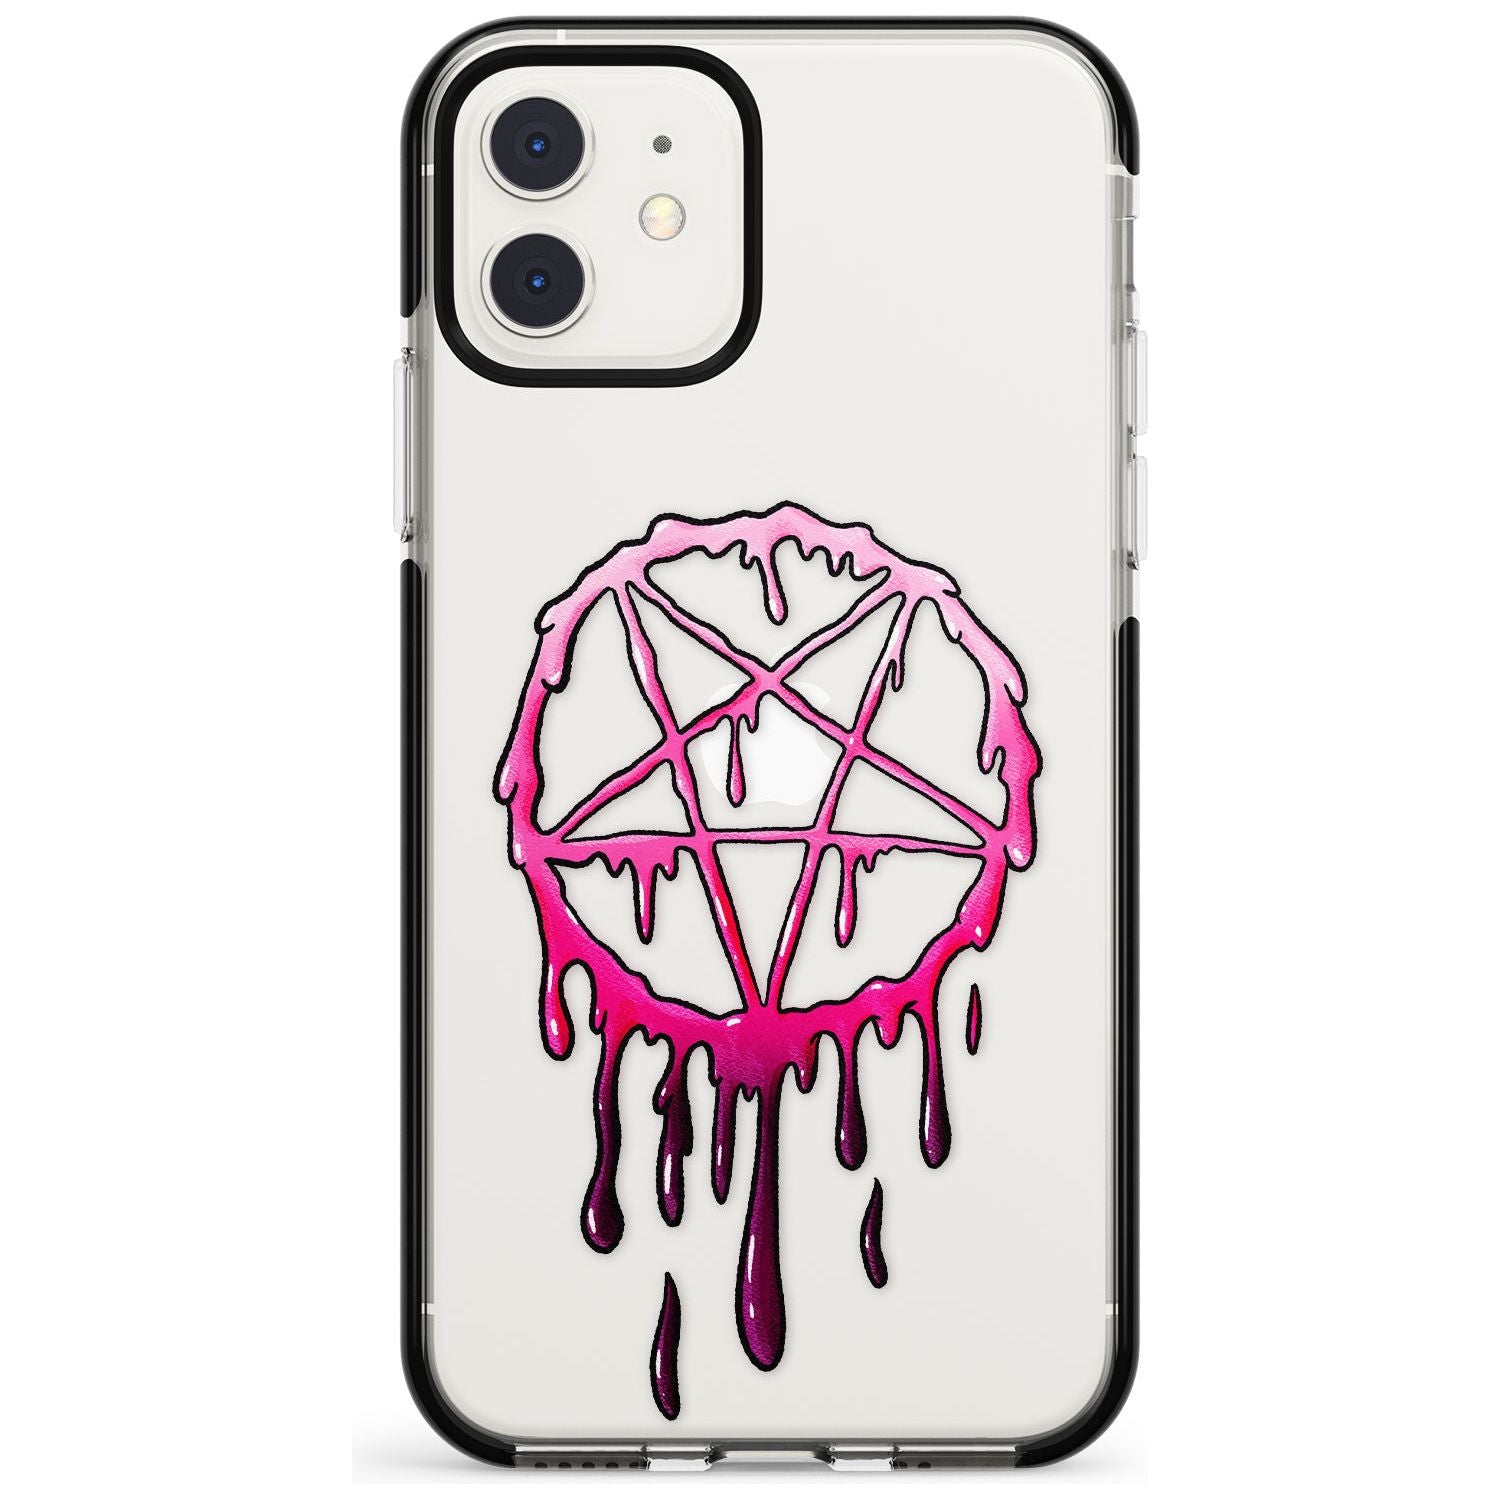 Pentagram of Blood Black Impact Phone Case for iPhone 11 Pro Max